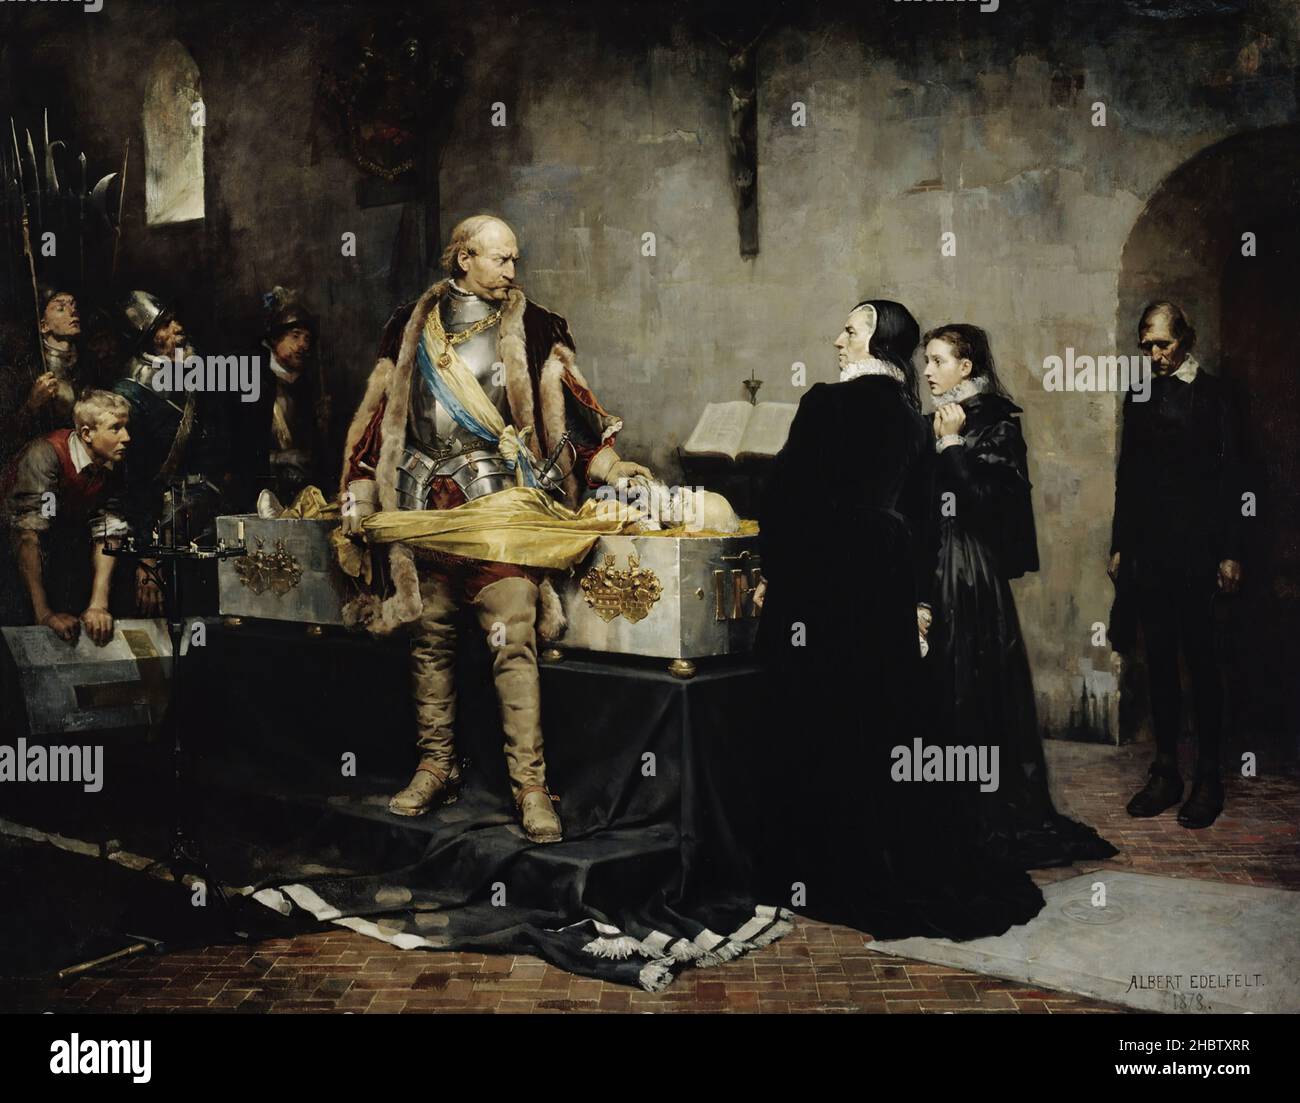 Duca Karl Inonlting il cadavere di Klaus Fleming - 1878 - olio su tela 157 x 202 cm - Edelfelt Albert Foto Stock